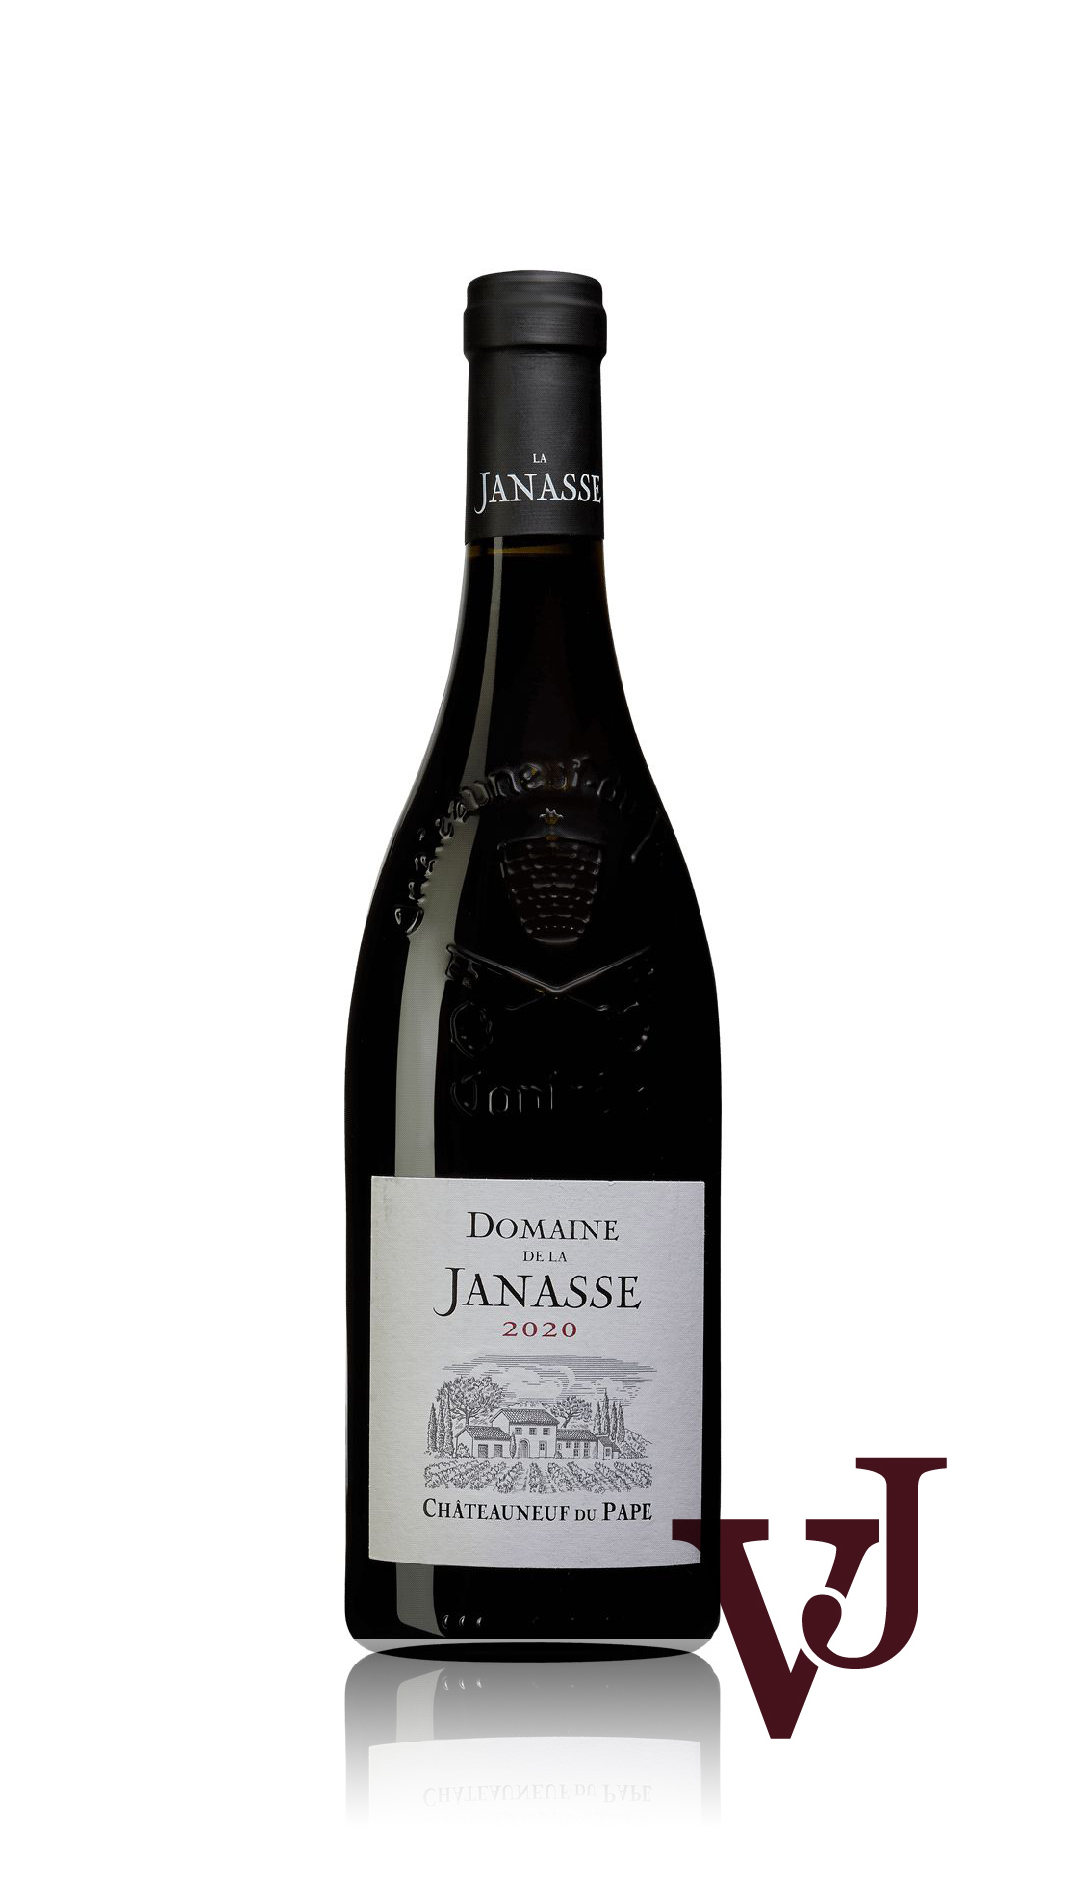 Rött Vin - Domaine de la Janasse Chateauneuf-du-Pape 2020 artikel nummer 9349801 från producenten Domaine de la Janasse från Frankrike